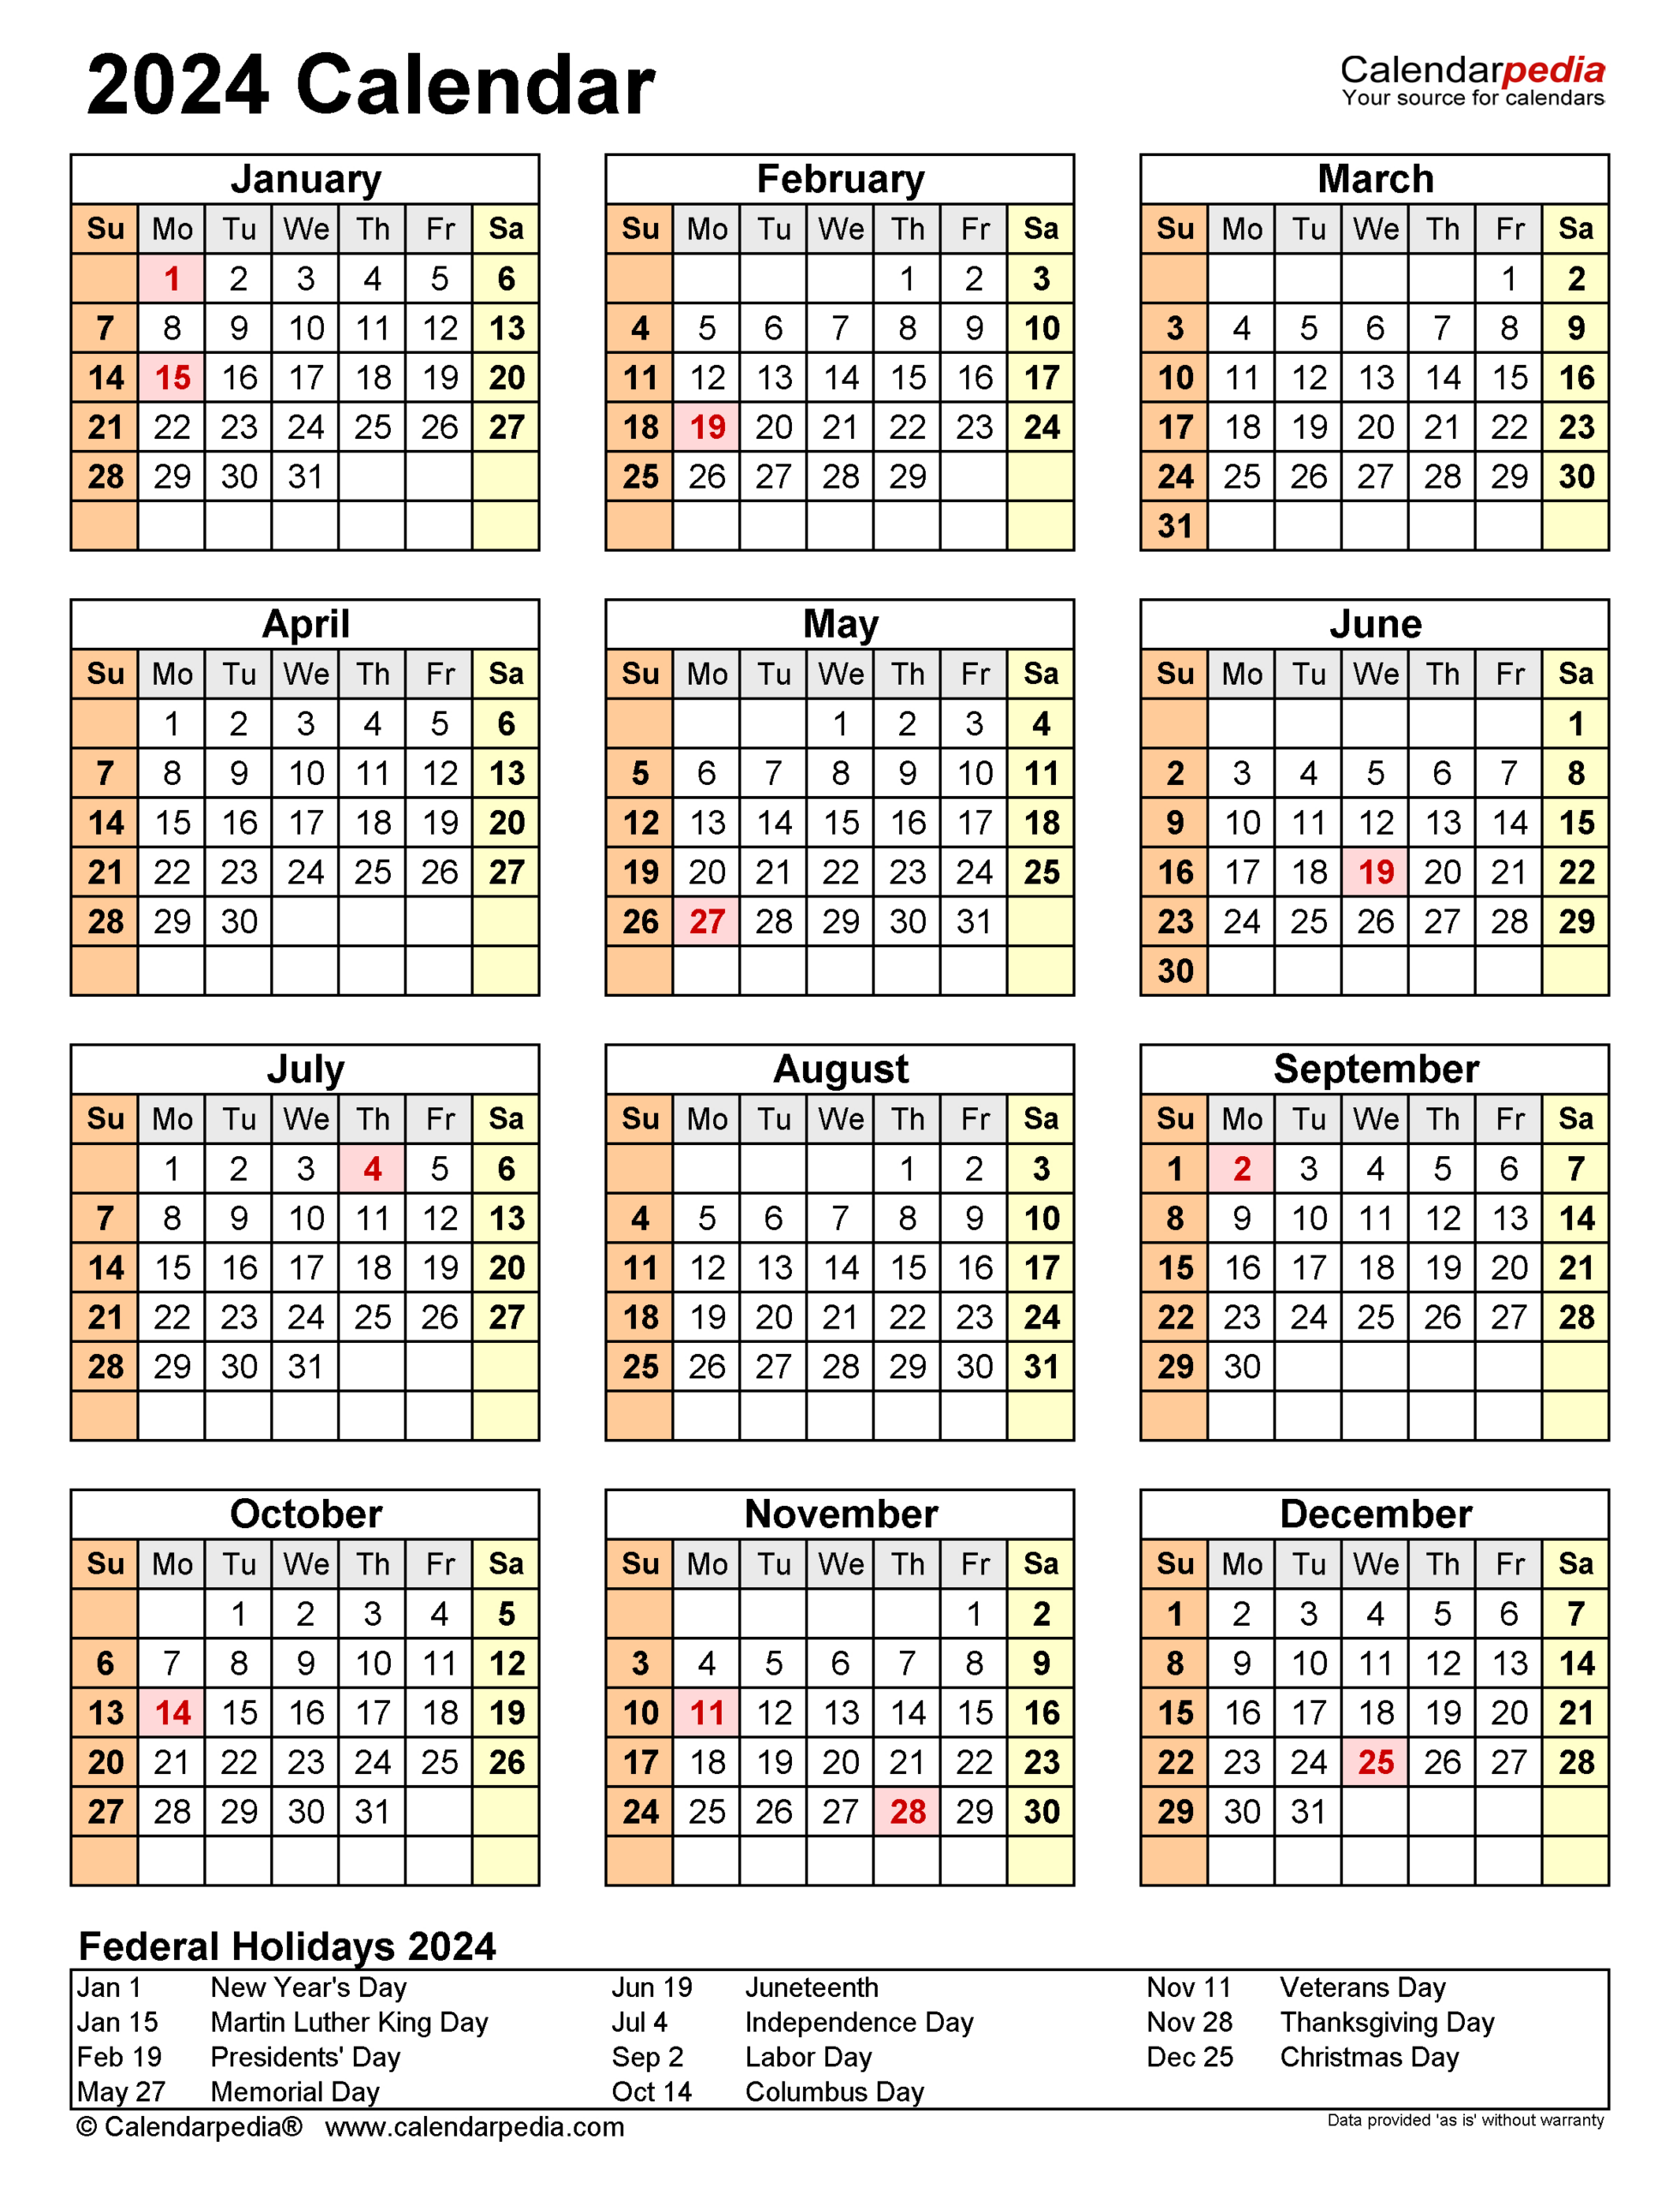 2024 Calendar - Free Printable Excel Templates - Calendarpedia | Yearly Calendar Events 2024